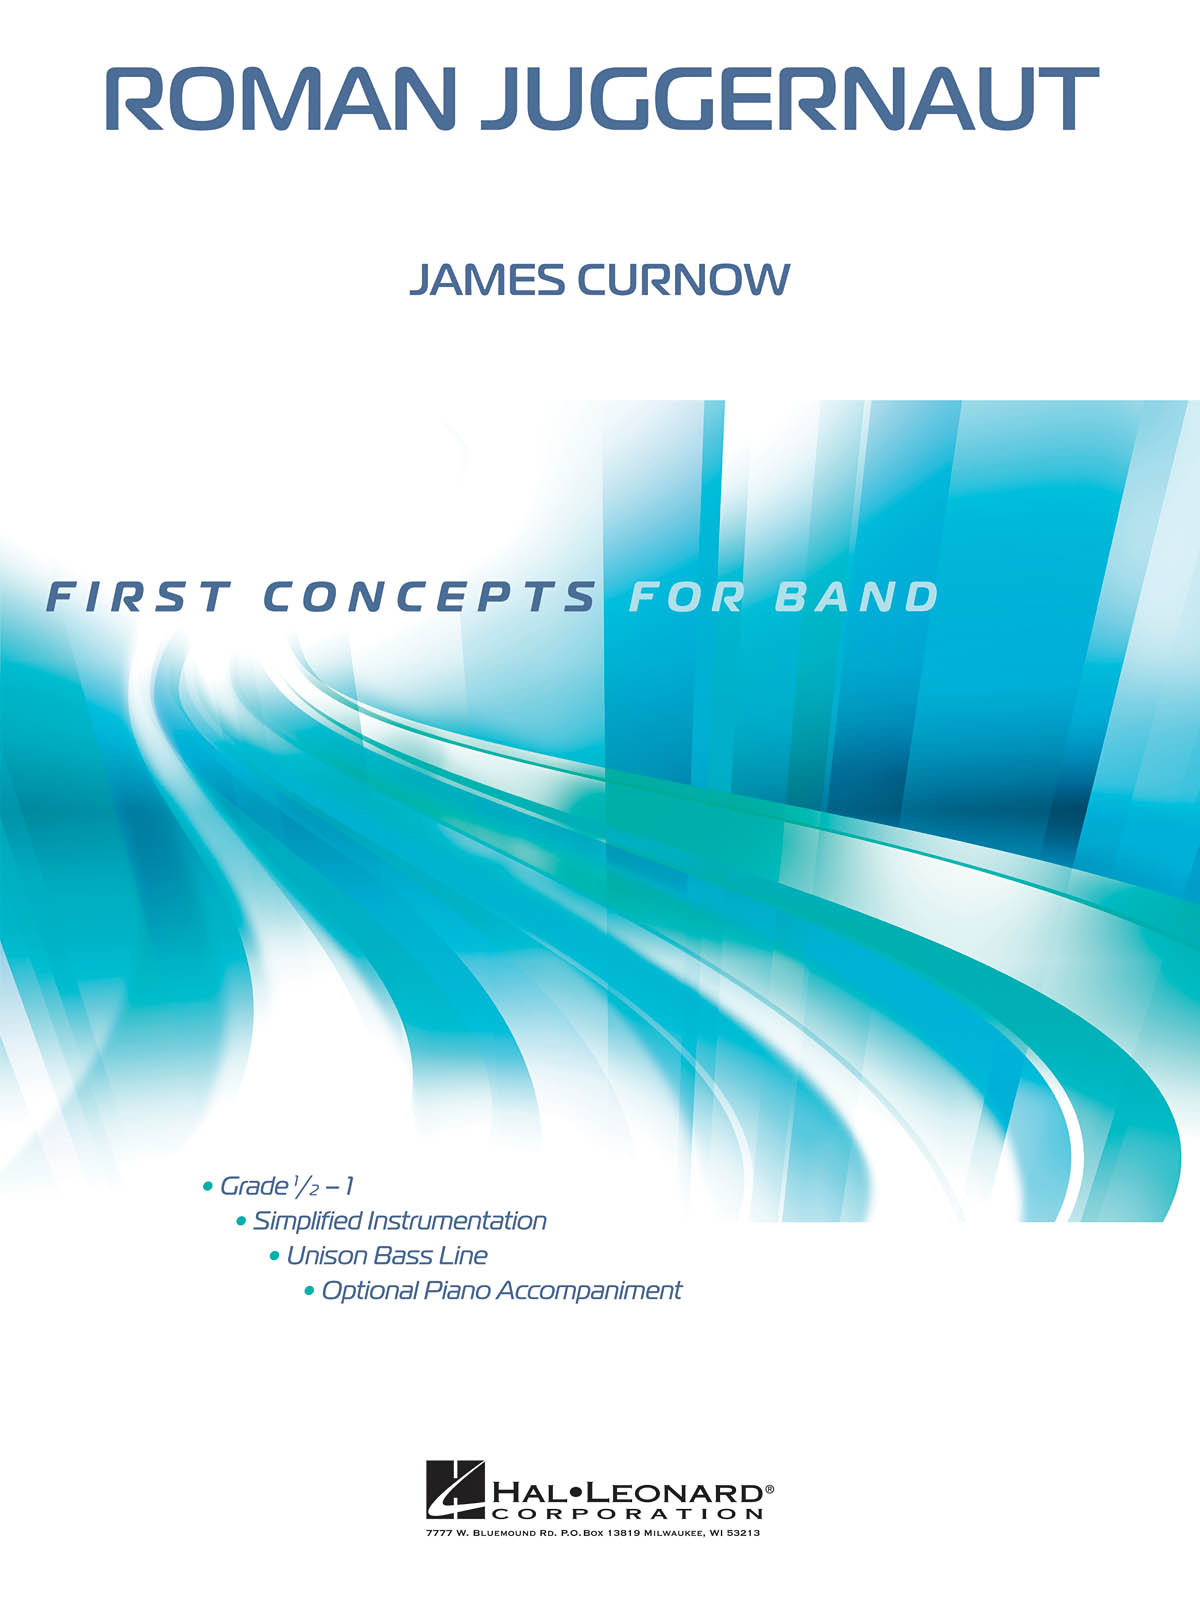 James Curnow: Roman Juggernaut (Harmonie)